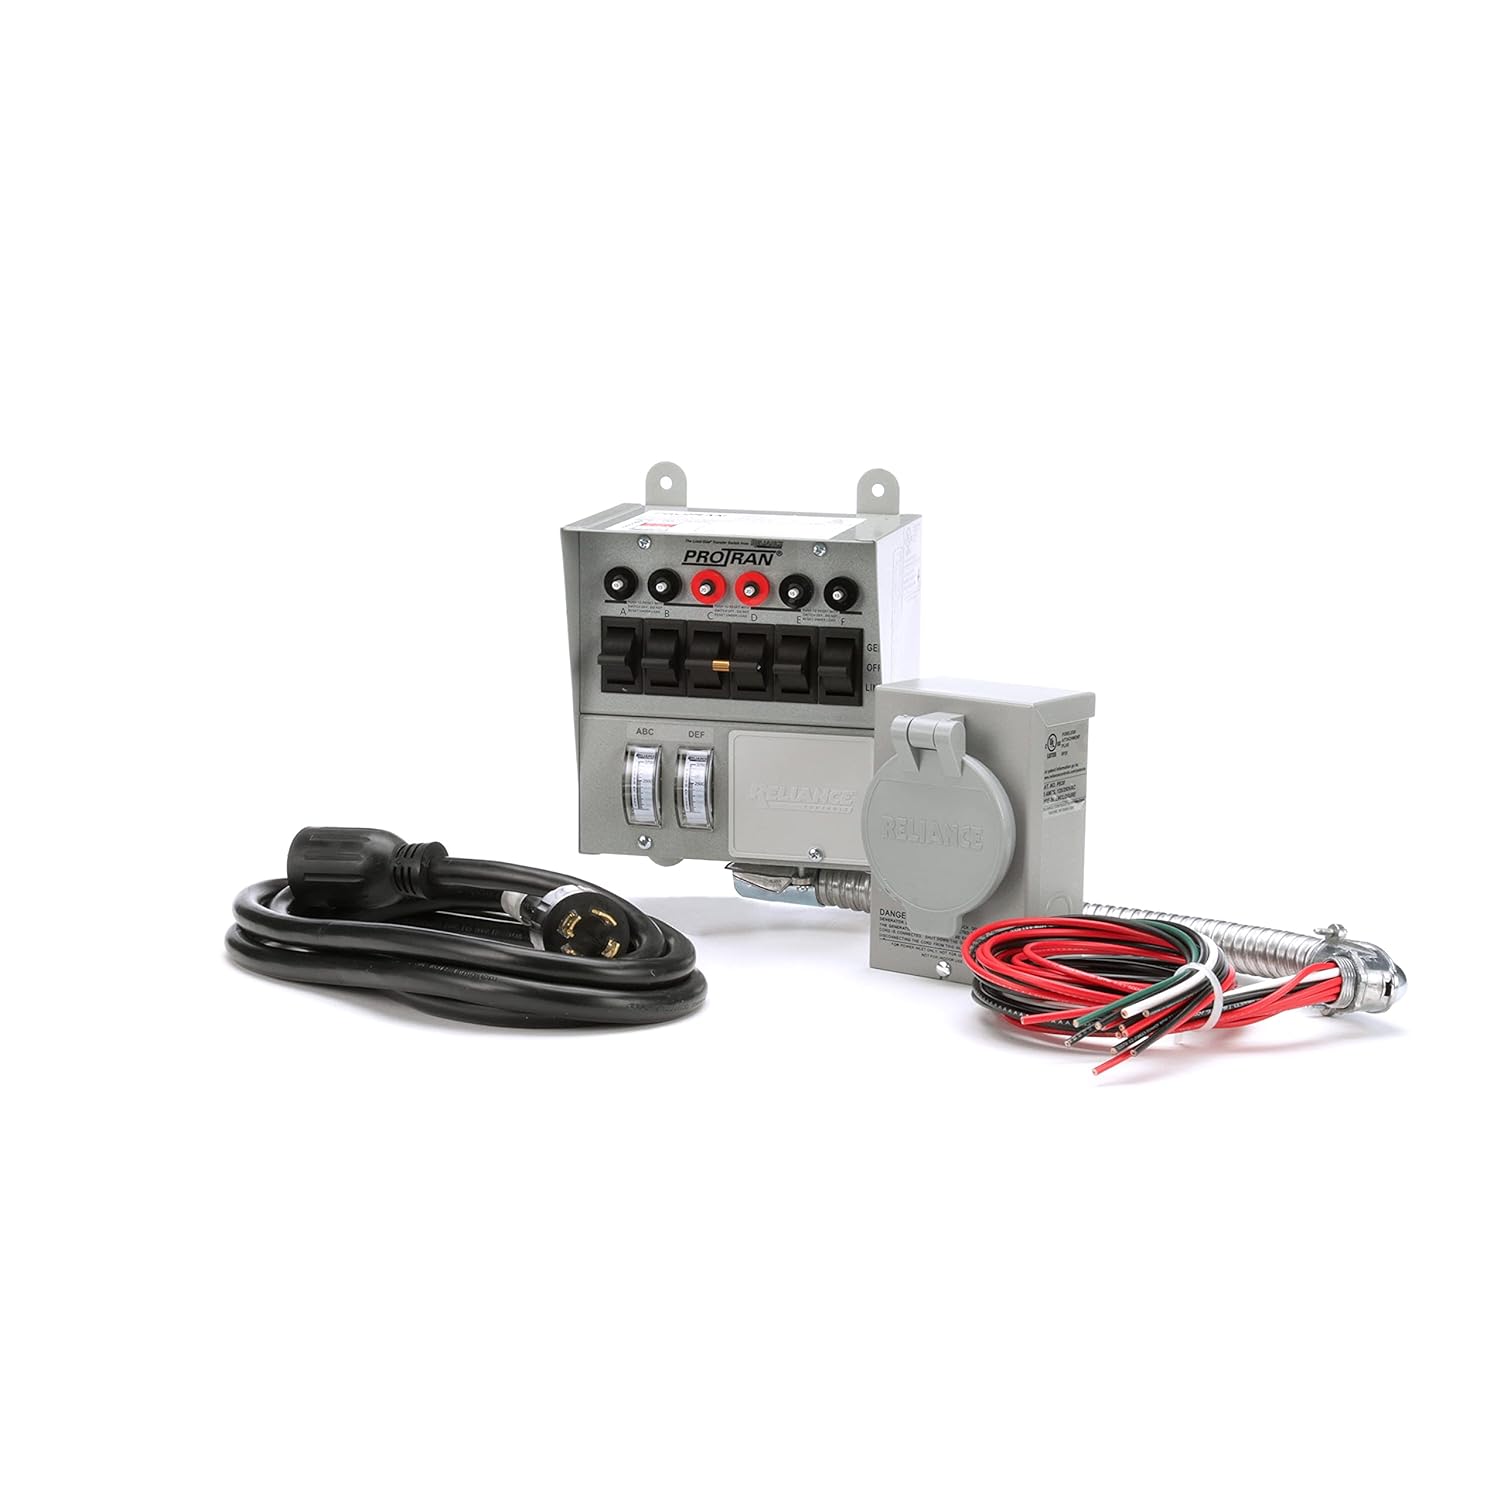 Reliance Controls 31410CRK Pro/Tran 10-Circuit 30 Amp Generator Transfer Switch Kit,Gray - Reliance Controls Transfer Switch Kit Review